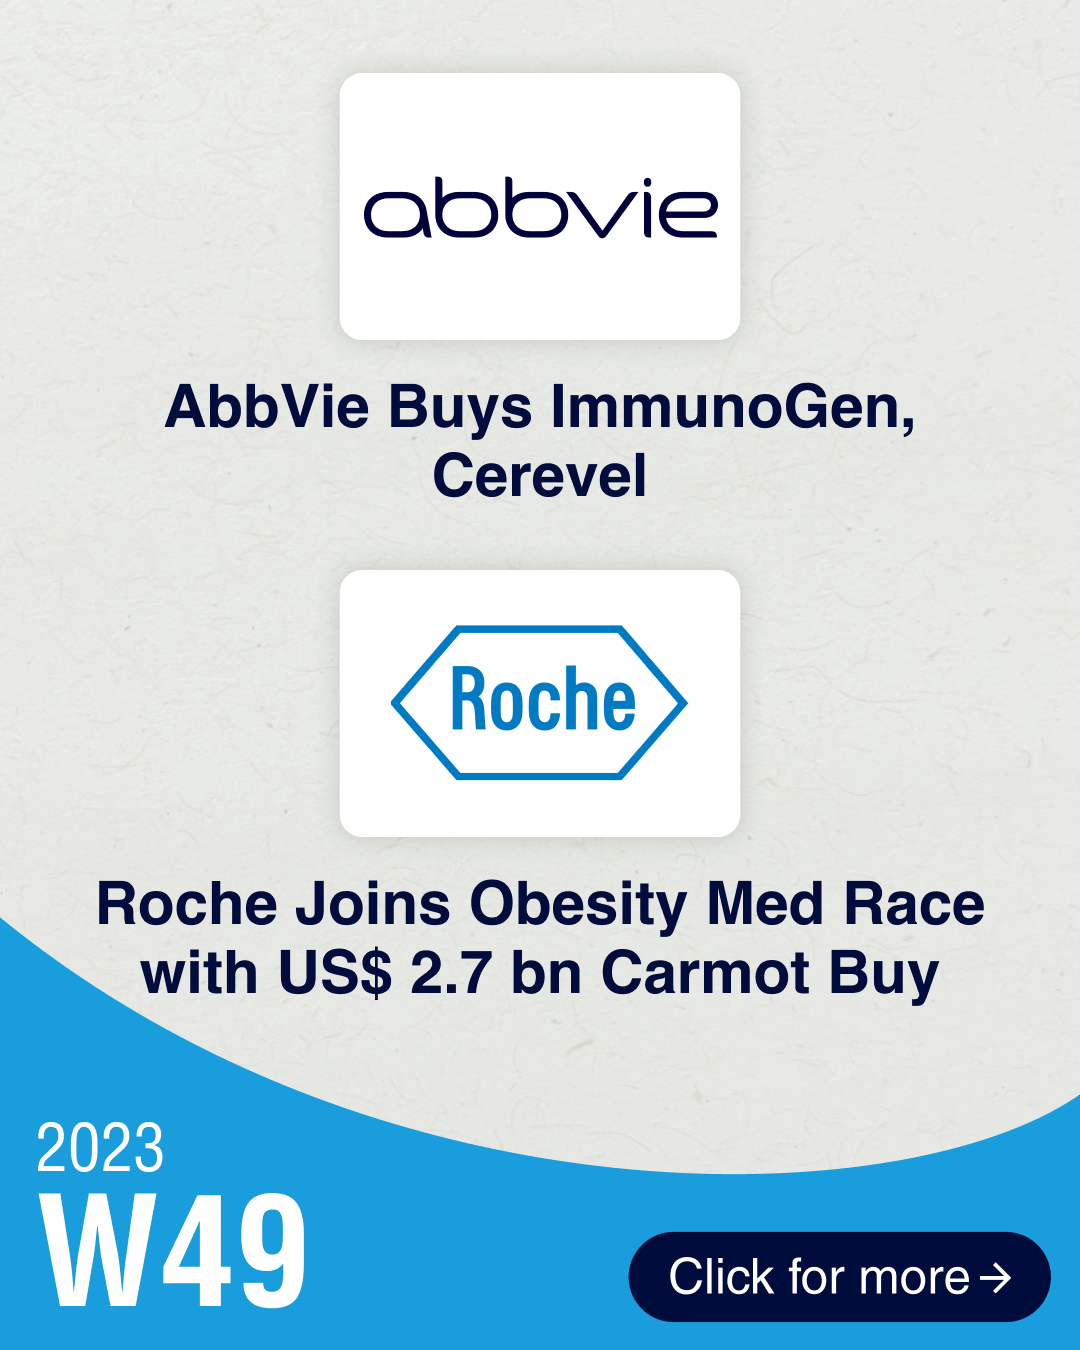 AbbVie acquires ImmunoGen, Cerevel; Roche joins obesity med race with Carmot buy